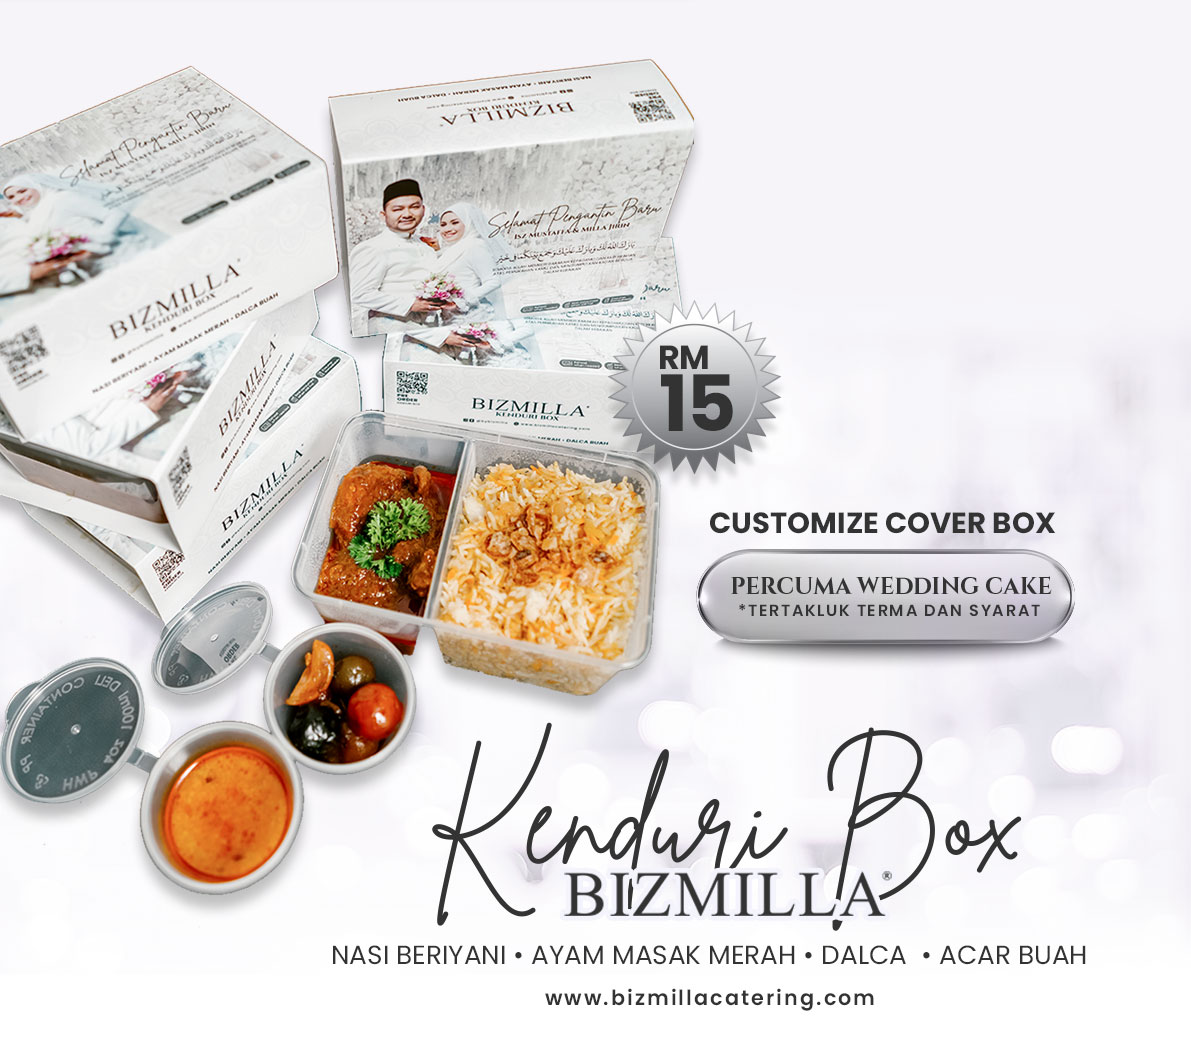 Kenduri Box by Bizmilla Catering